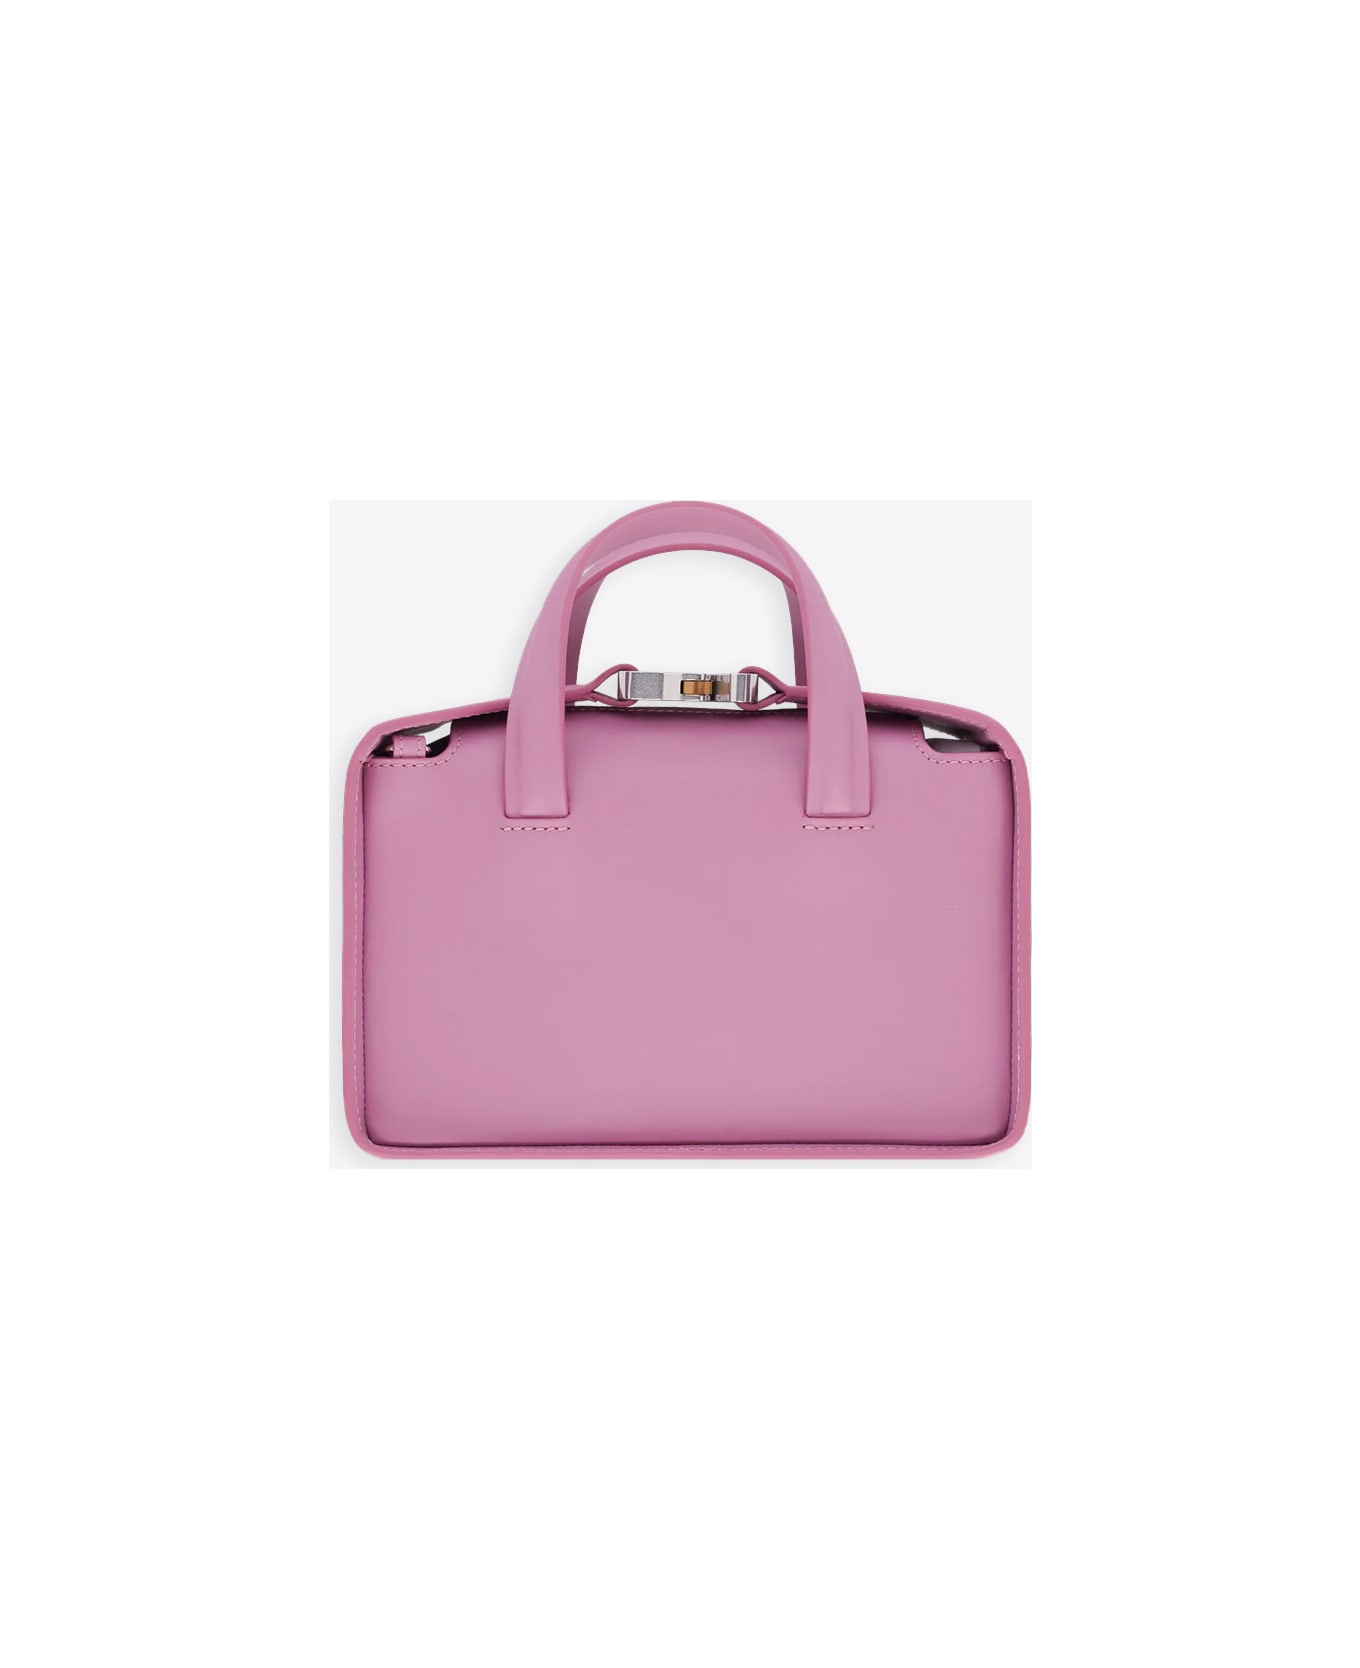 1017 ALYX 9SM Brie Bag Bubble pink leather bag - Brie bag - Rosa